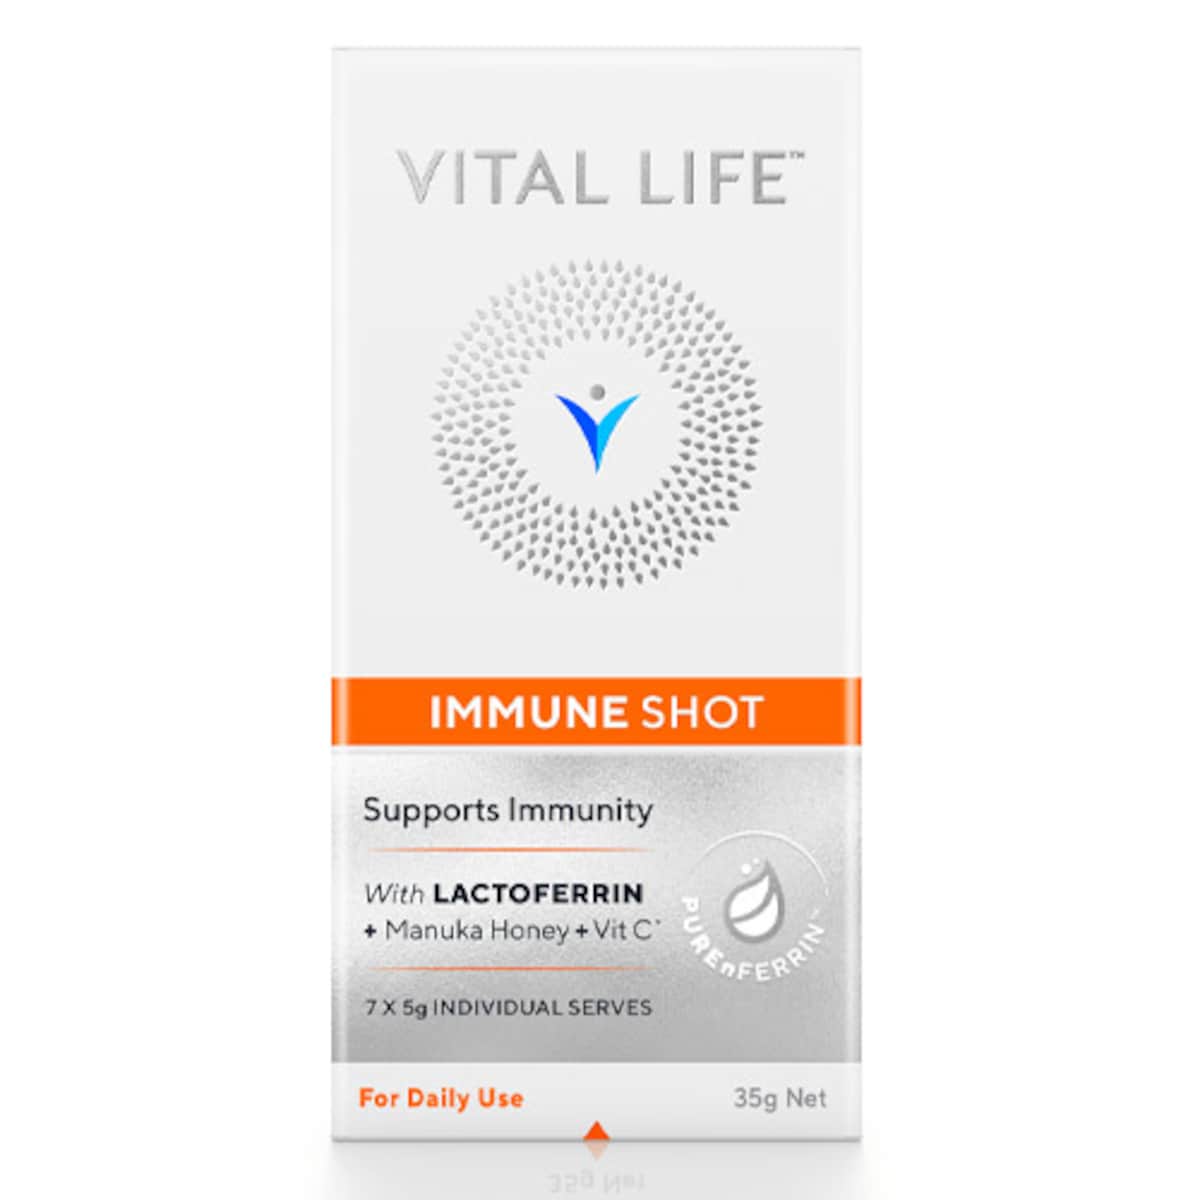 Vital Life Immune Shot 5g x 7 Serves